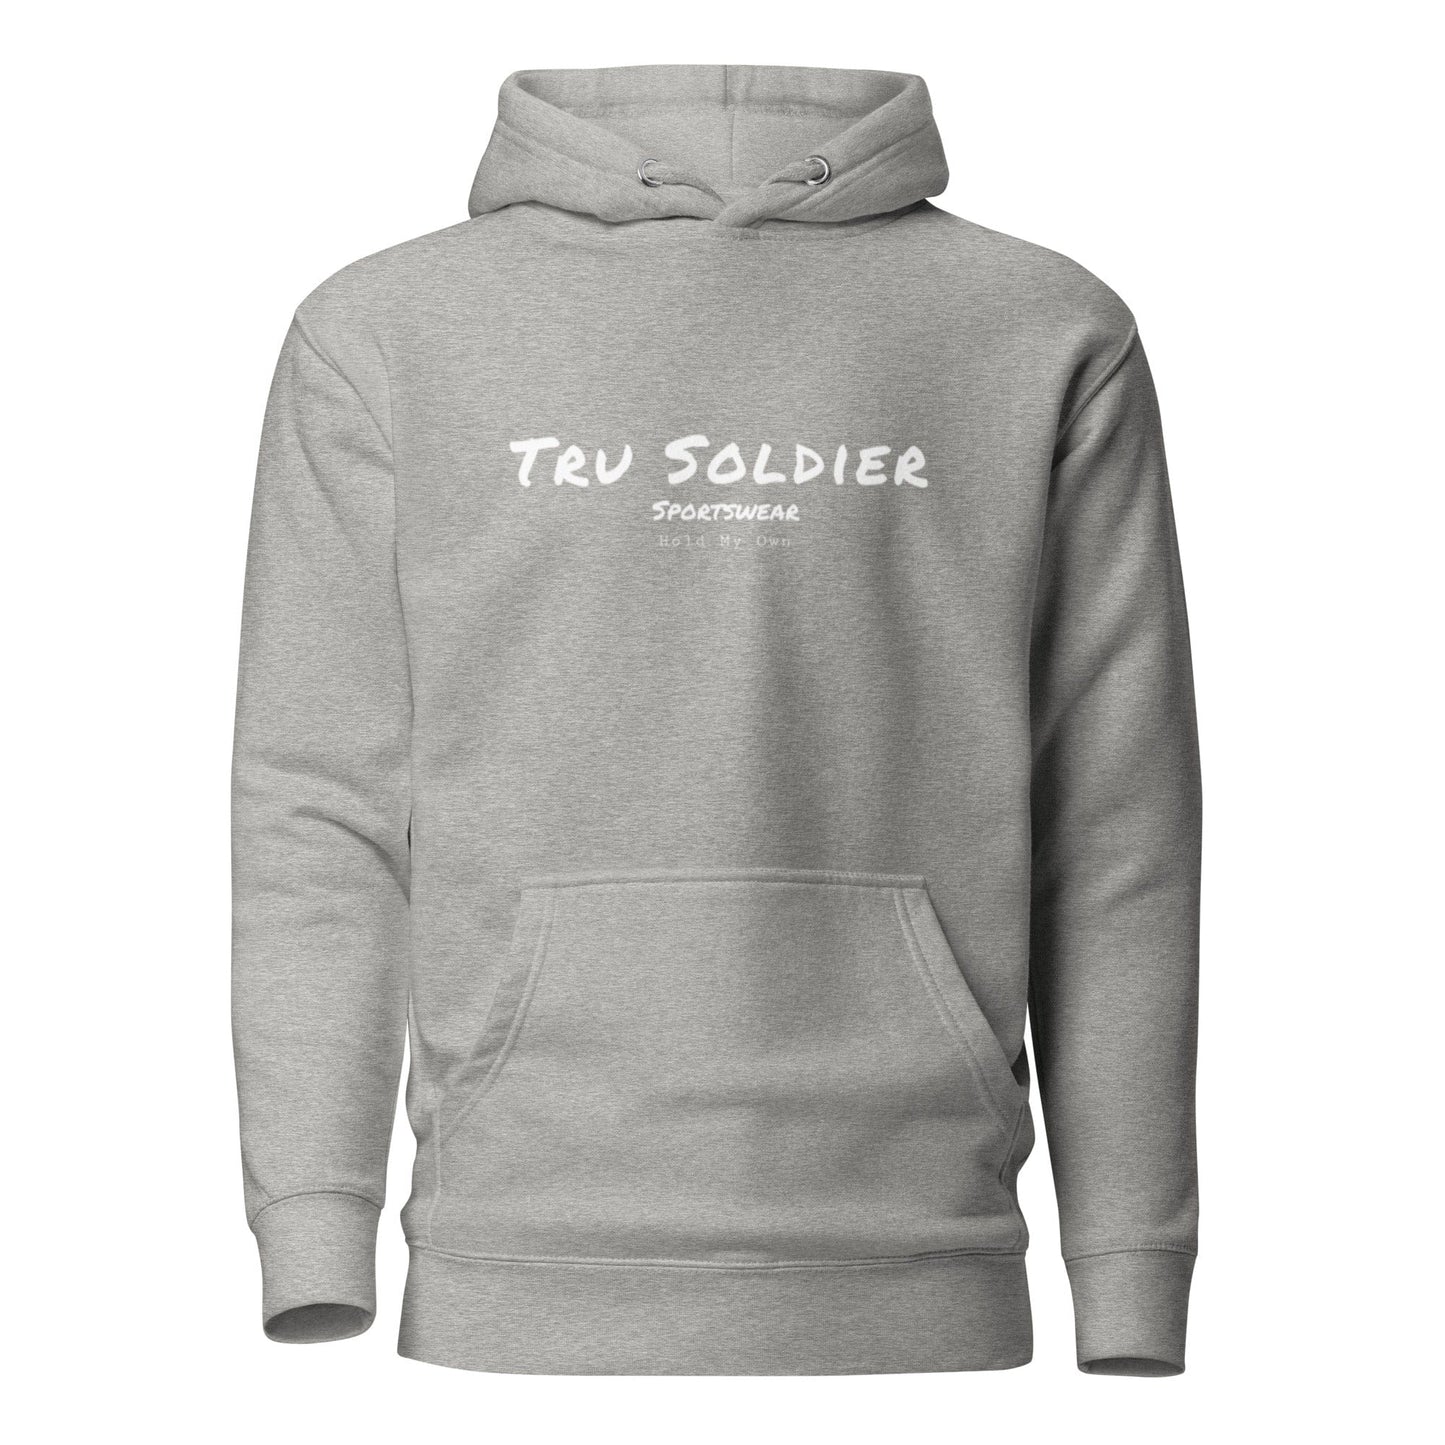 Tru Soldier Sportswear  Carbon Grey / S Signature Hoodie